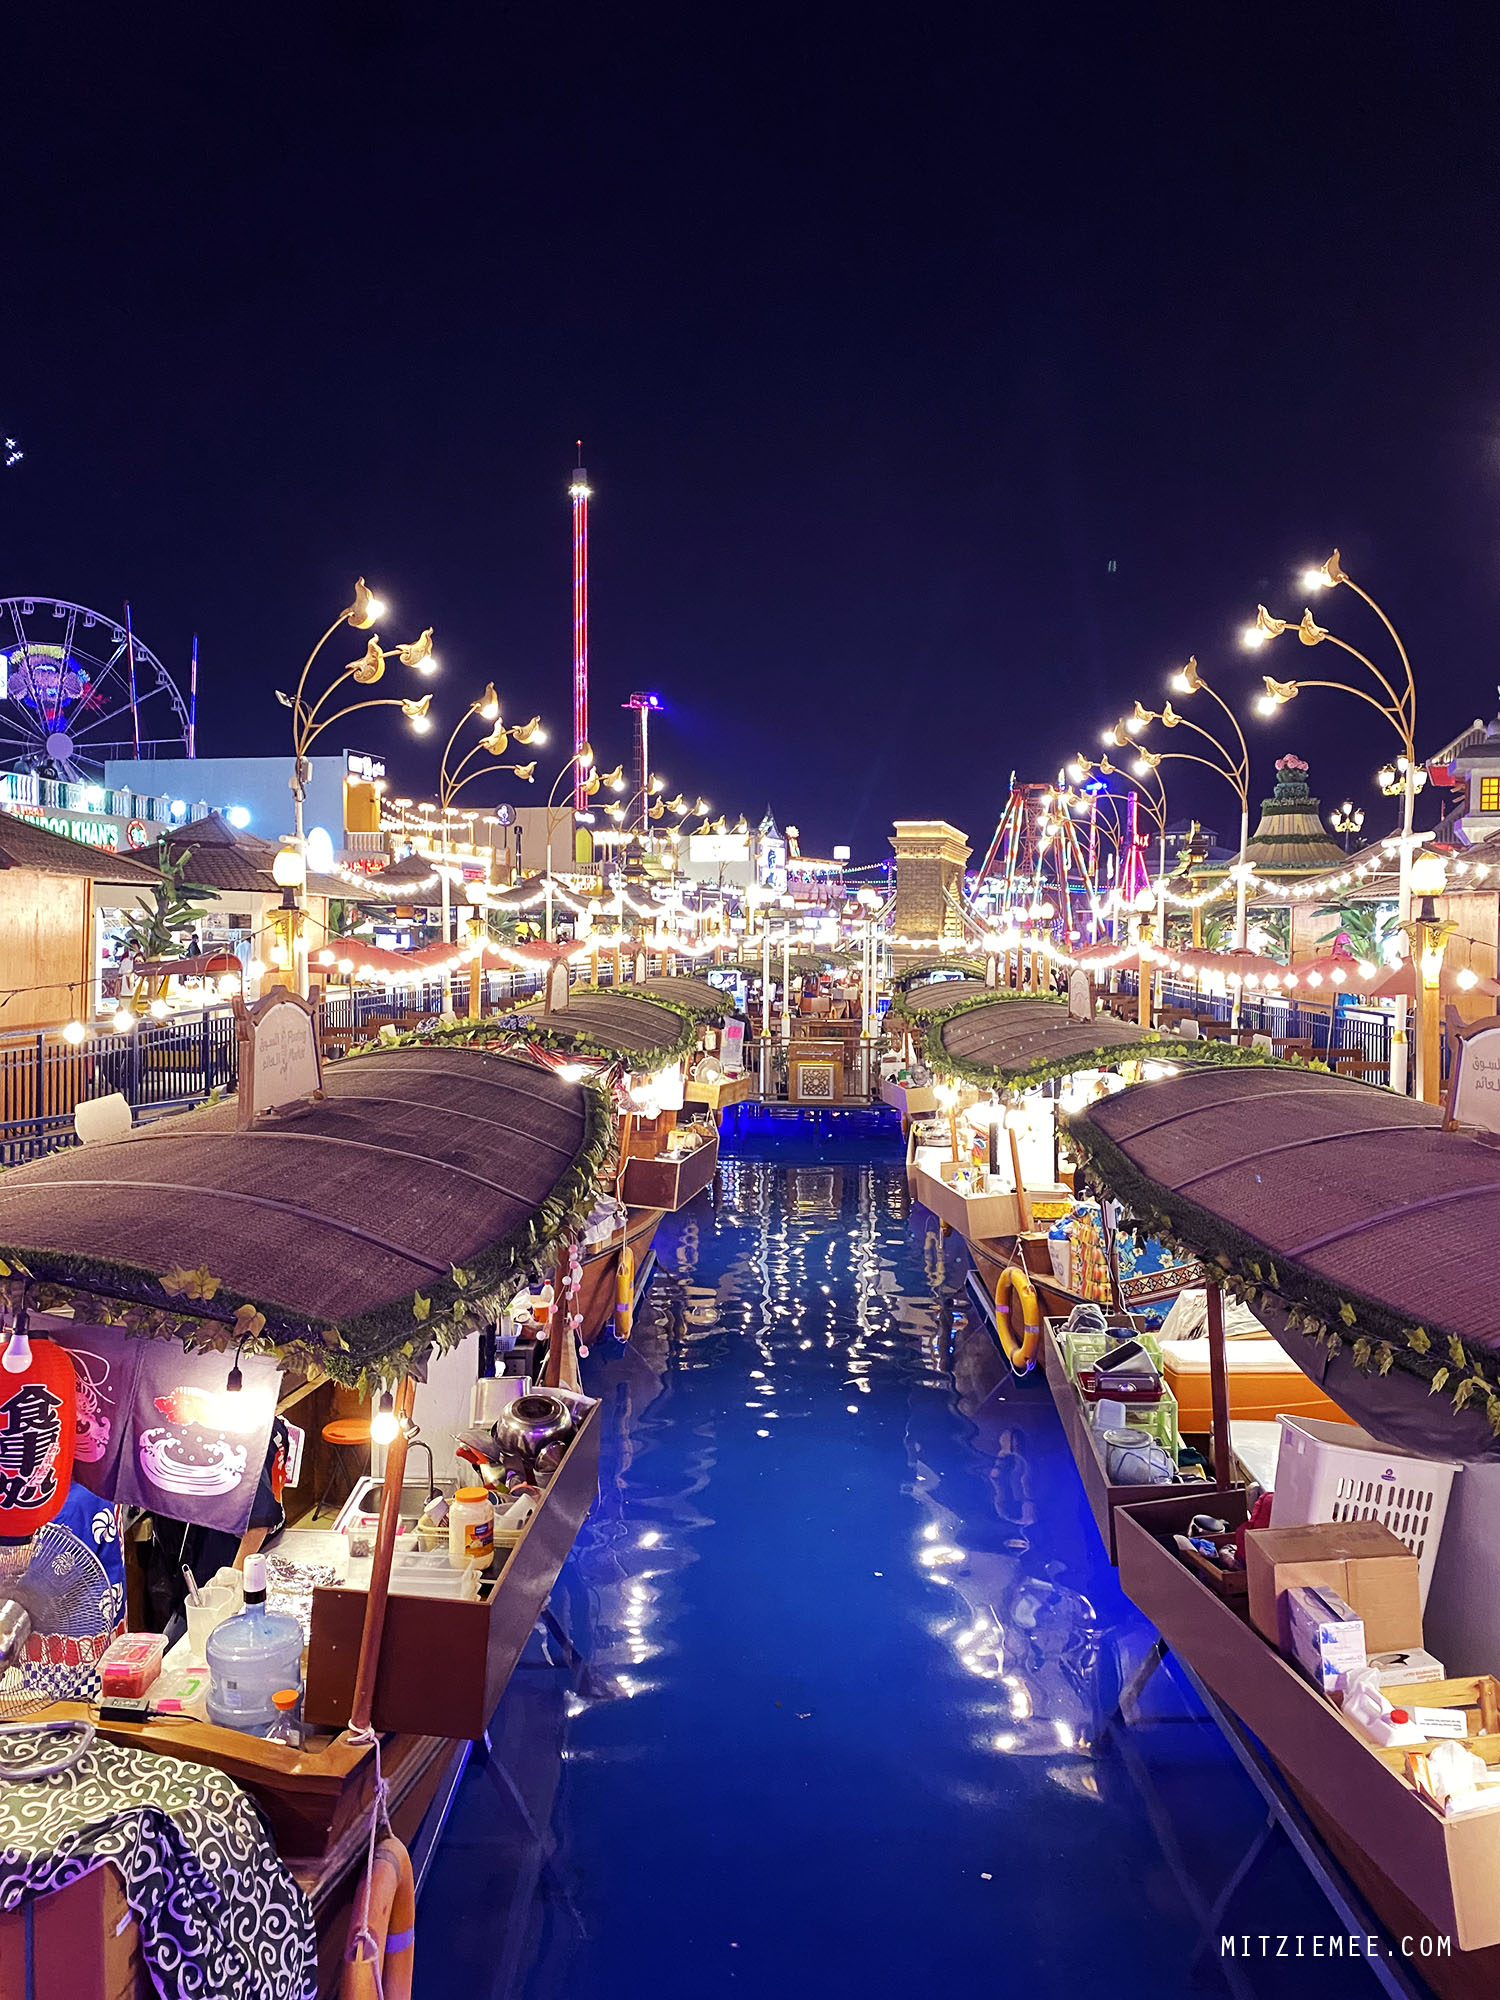 The Floating Market, Global Village in Dubai